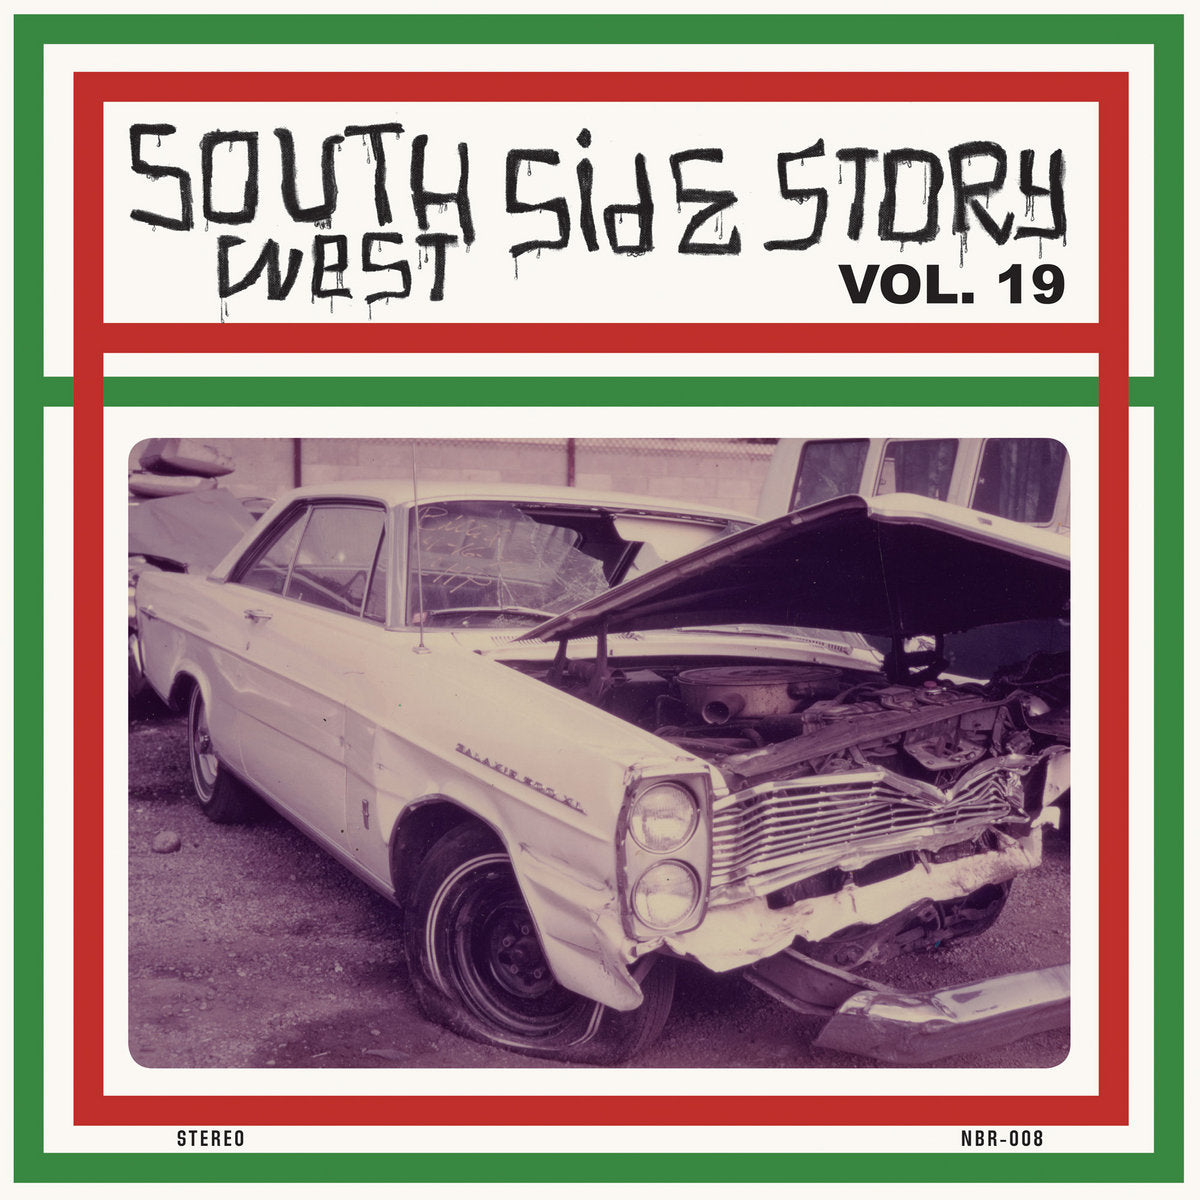 Southwest Side Story: Vol. 19 (New LP)